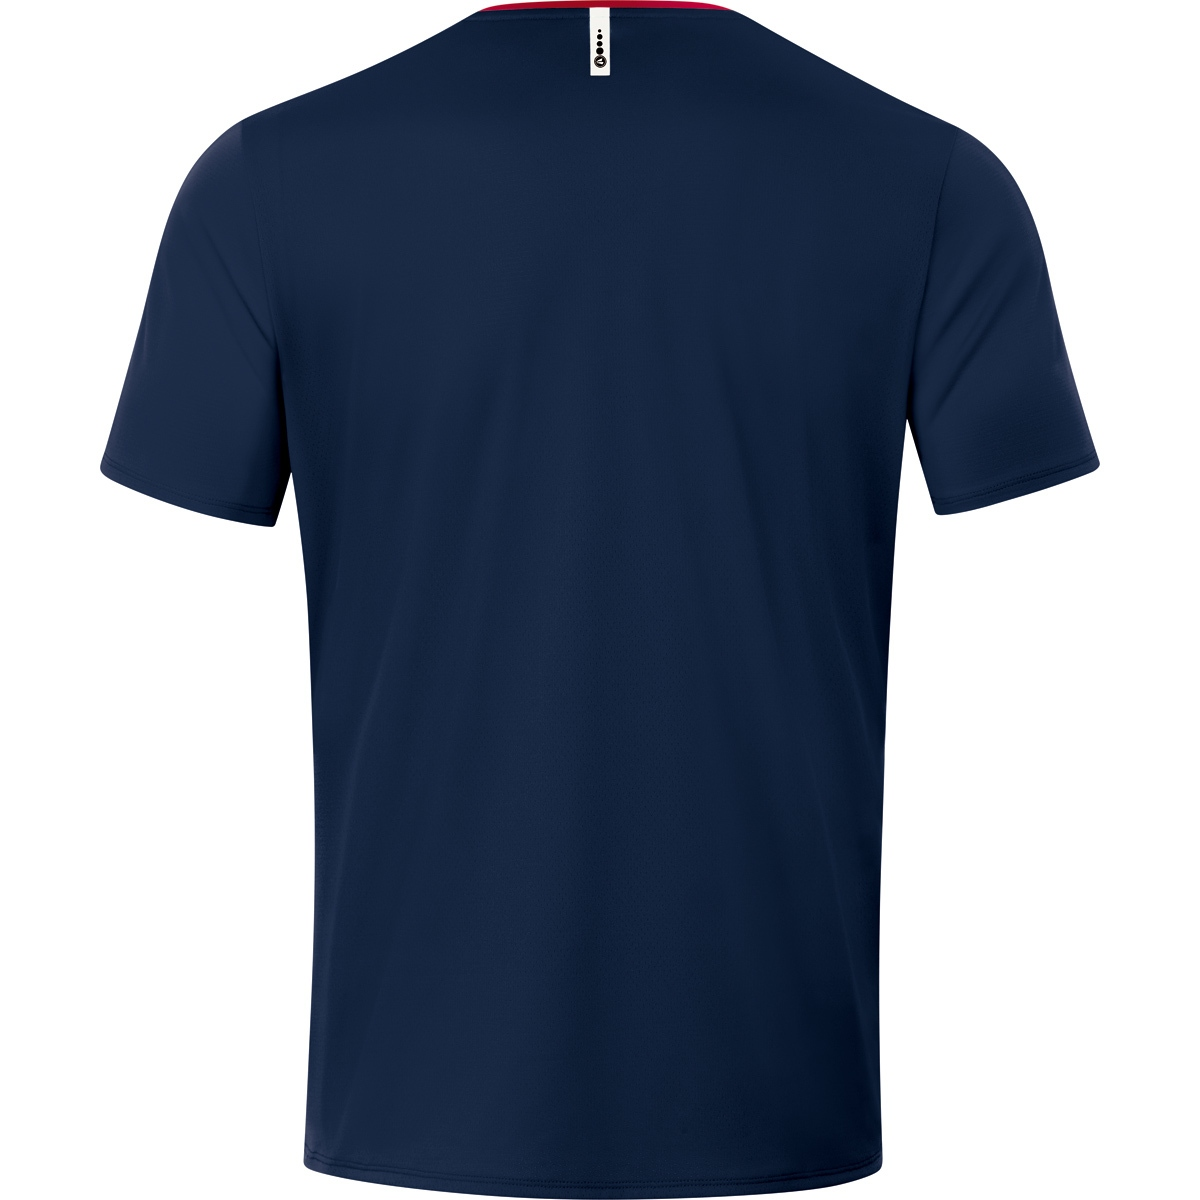 Herren, 2.0 JAKO Gr. marine/chili Champ 6120 4XL, T-Shirt rot,